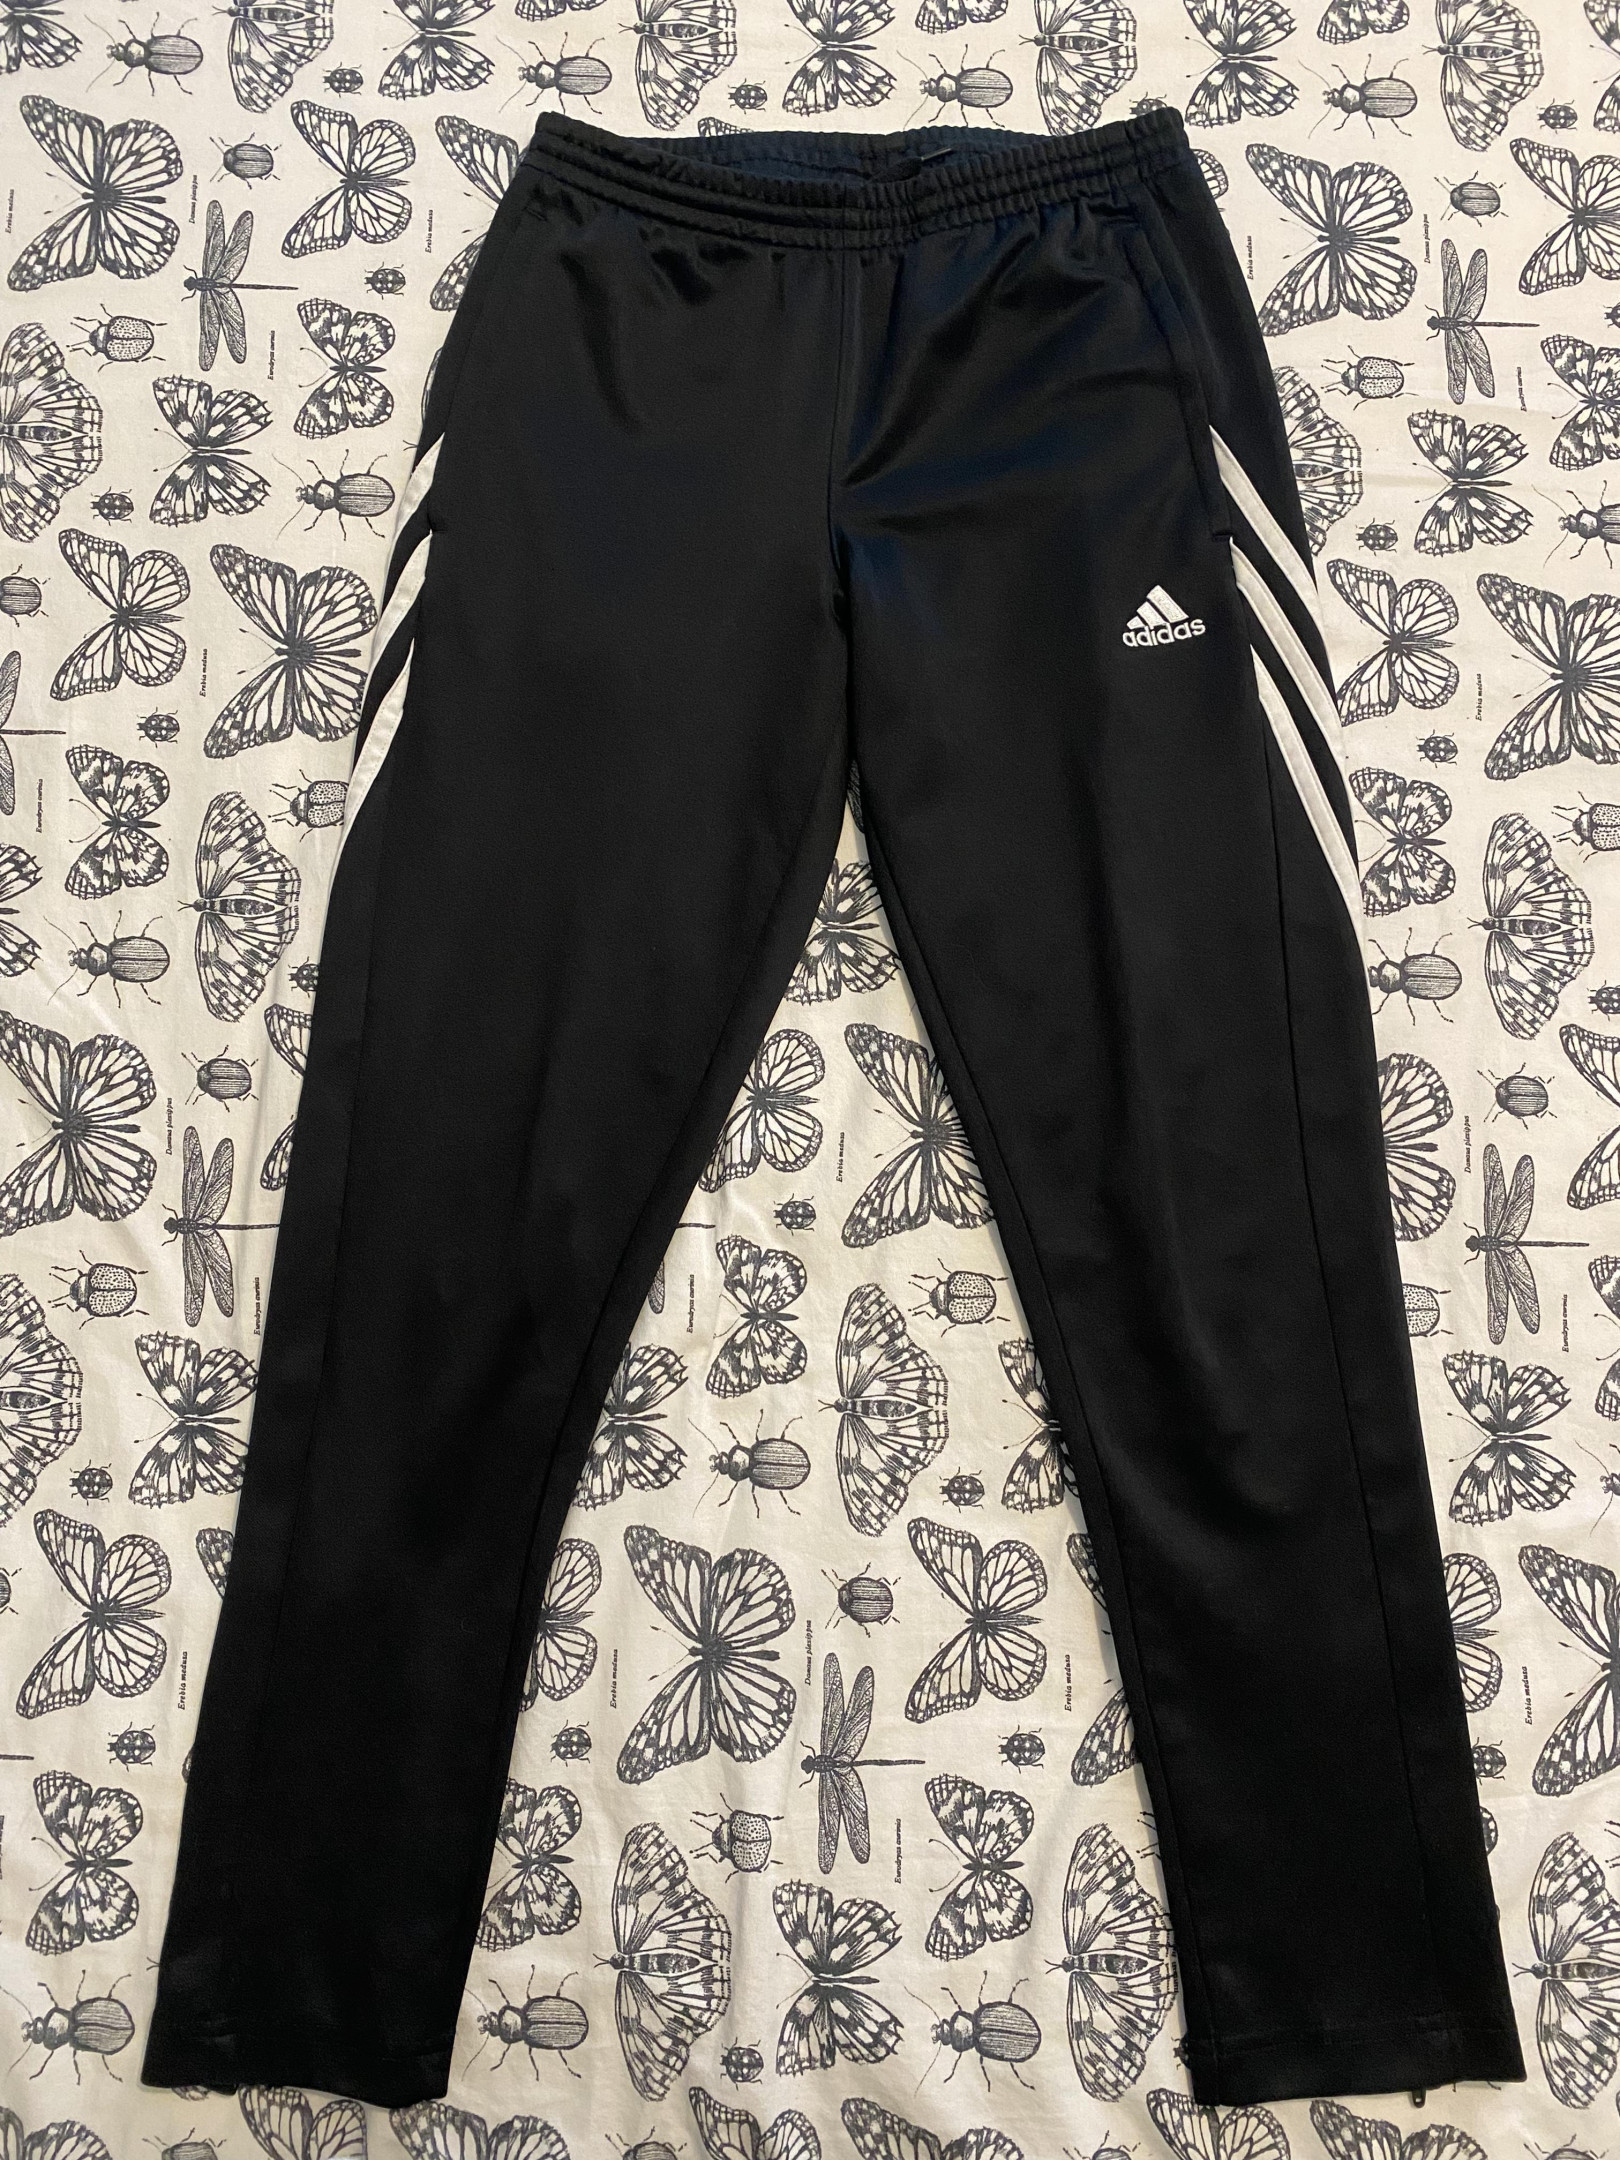 Adidas black sweatpants